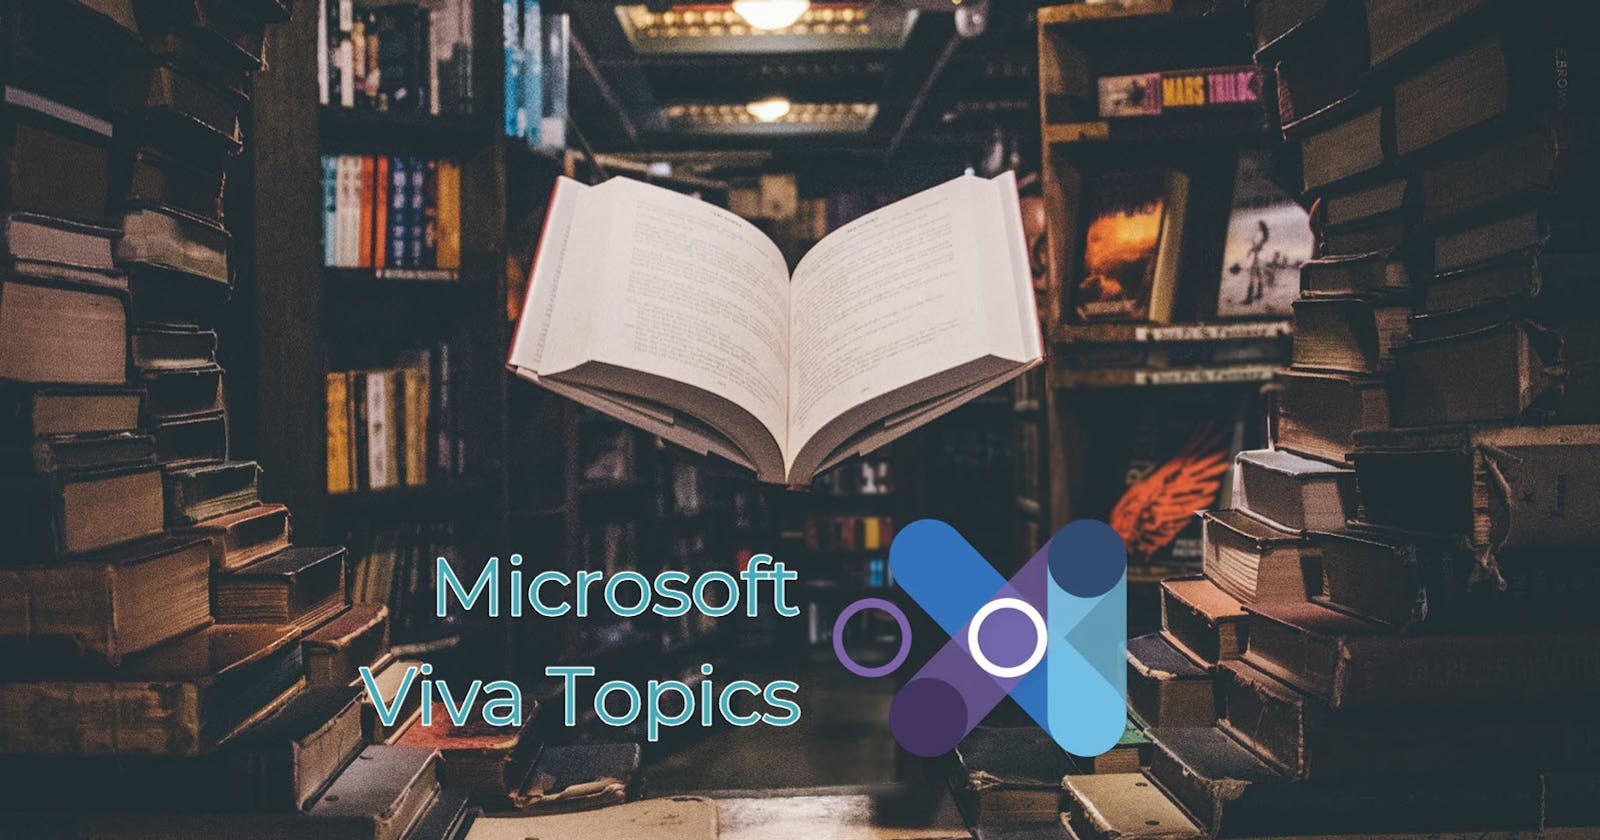 Microsoft Viva Topics - Corpoorate Knowledge Management with AI